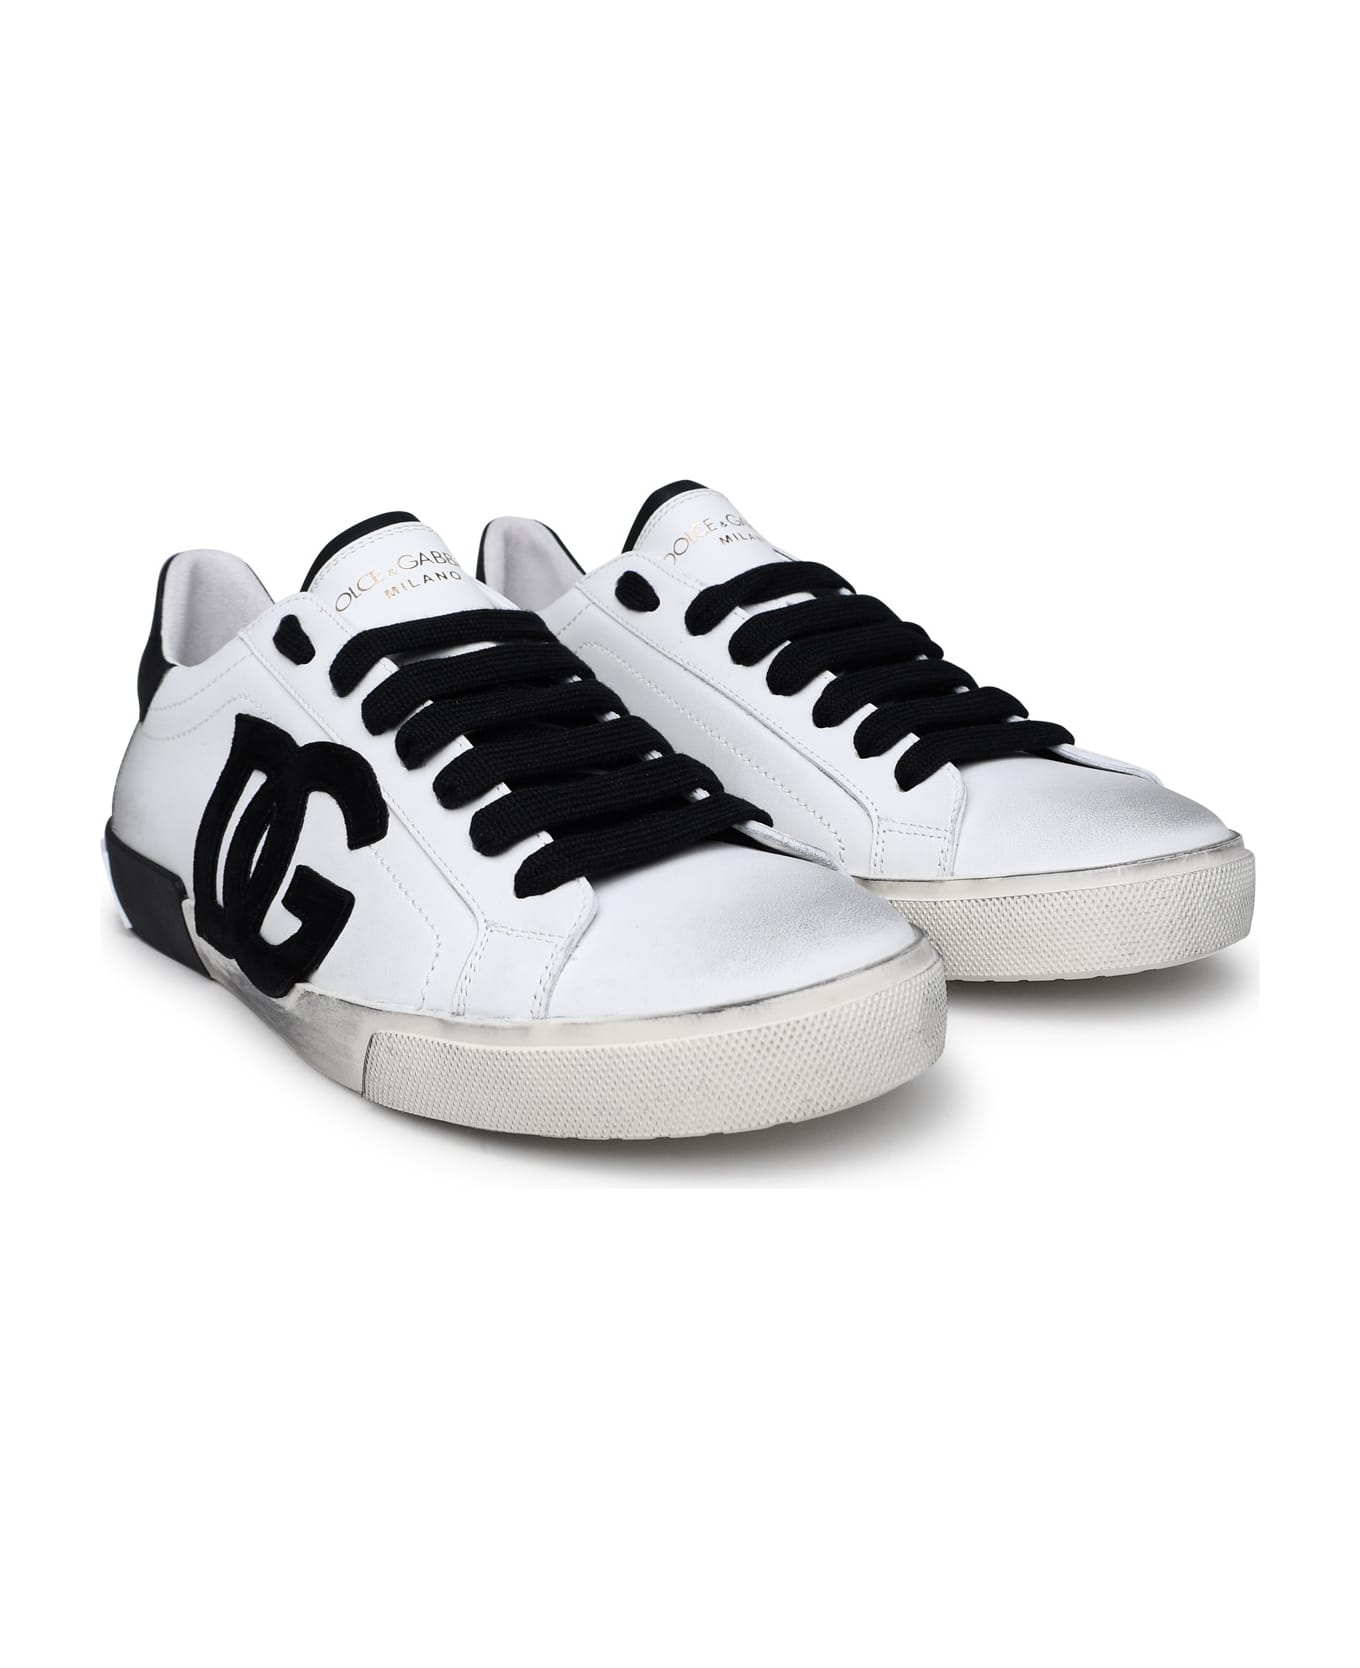 Dolce & Gabbana Leather Sneakers - BIANCO/NERO スニーカー